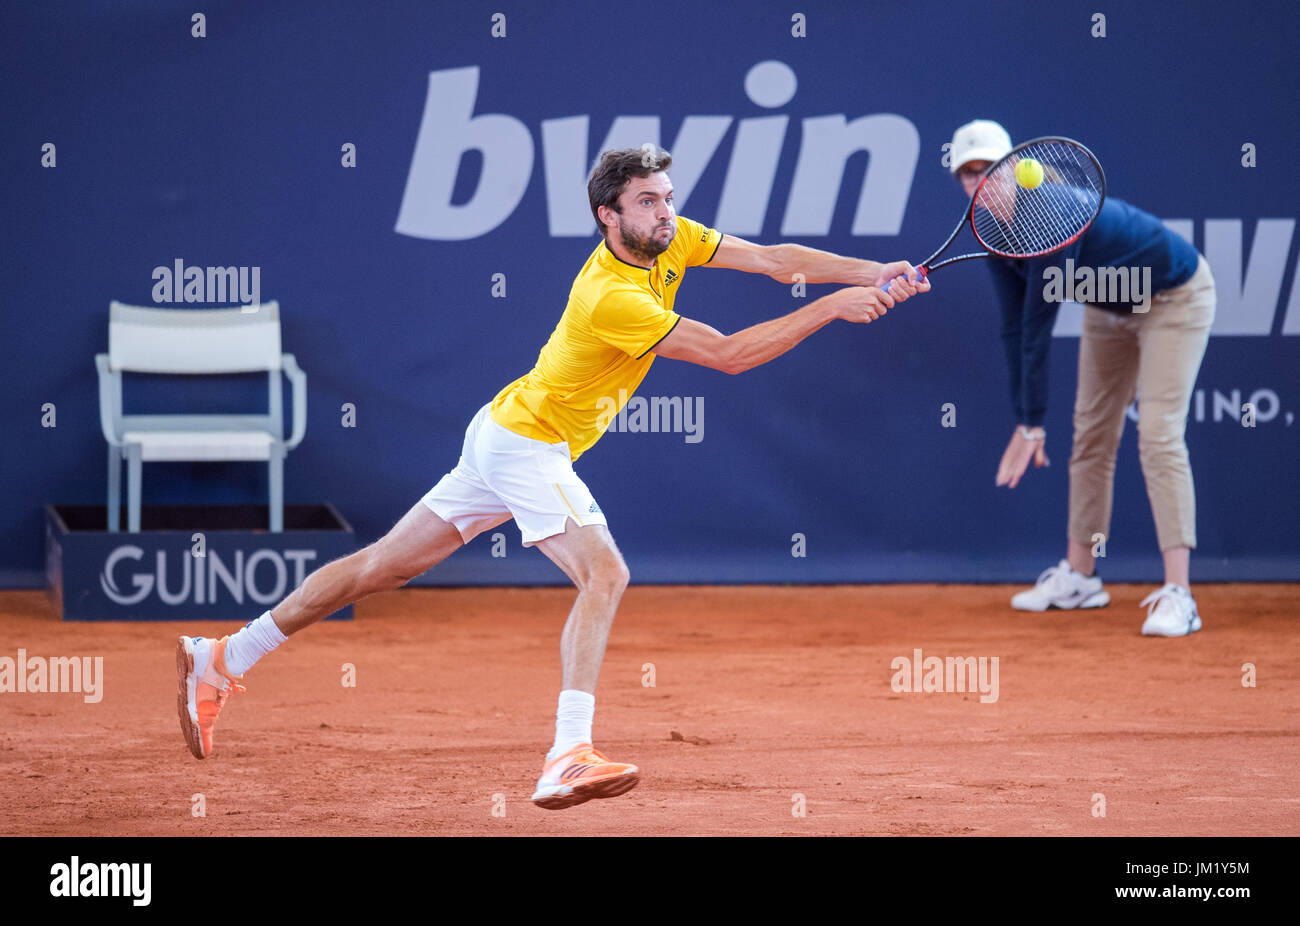 Gilles simon atp tennis tour hi-res stock photography and images - Alamy